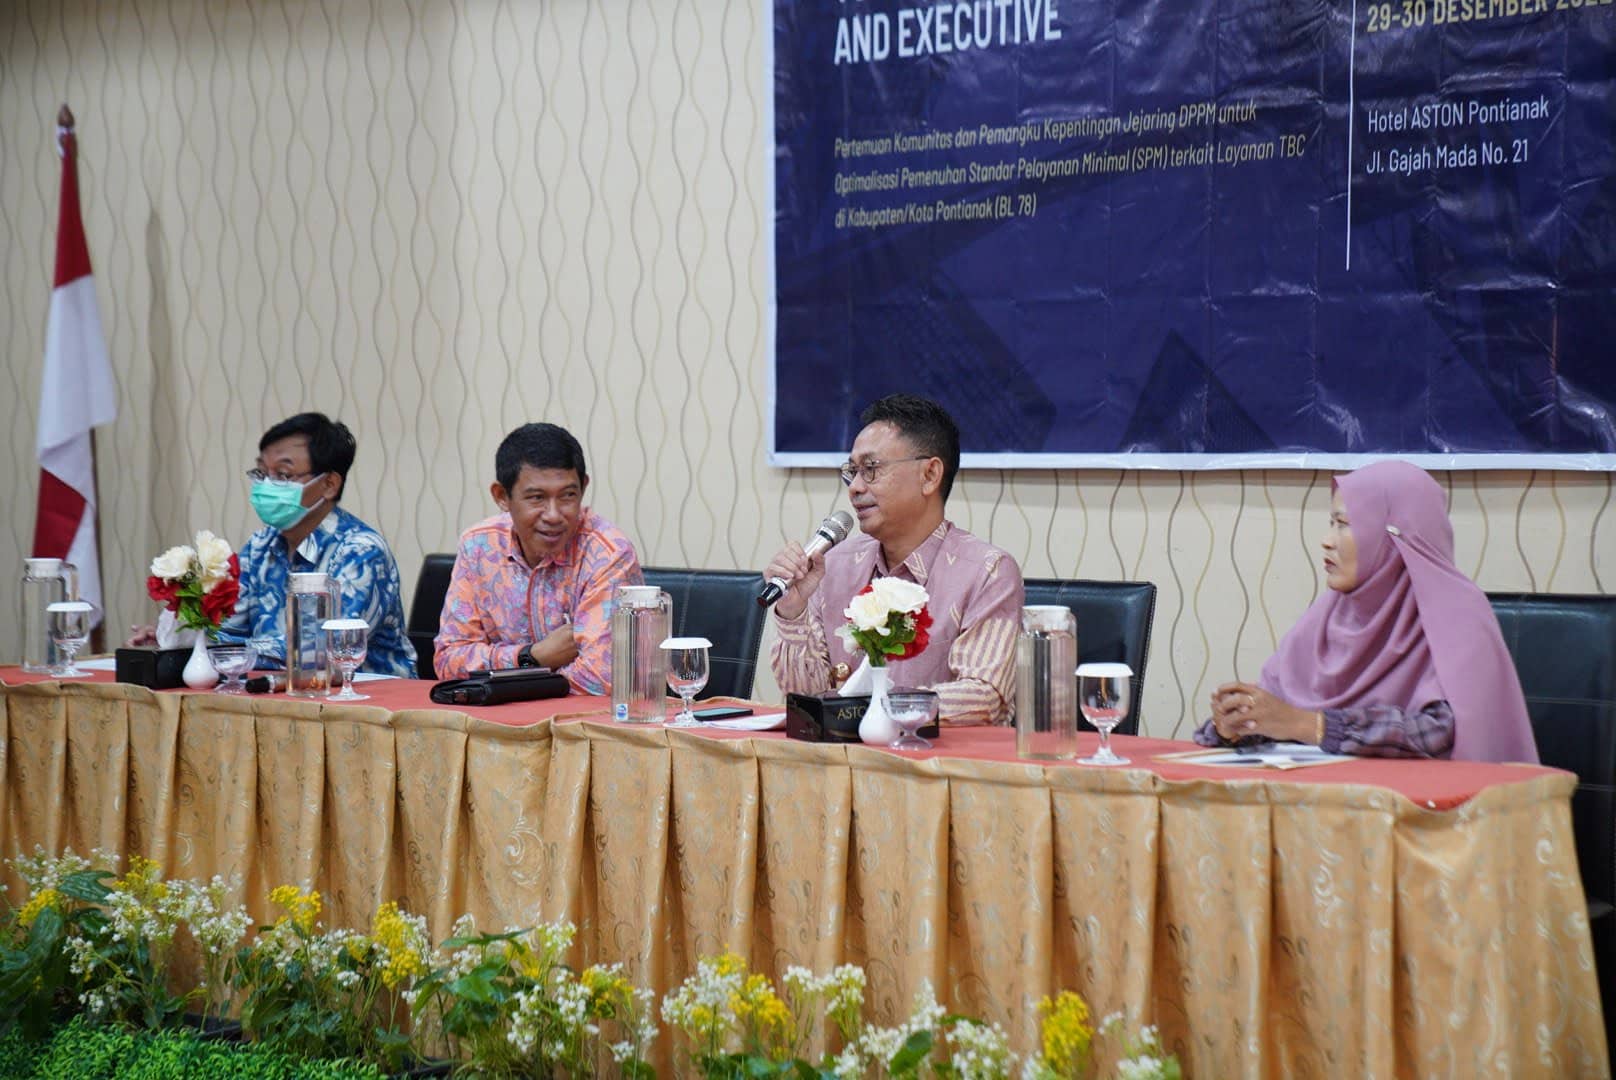 Wali Kota Pontianak, Edi Rusdi Kamtono memberikan sambutan pada pertemuan komunitas dan pemangku kepentingan yang digelar Yayasan Bina Asri. (Foto: Kominfo For KalbarOnline.com)